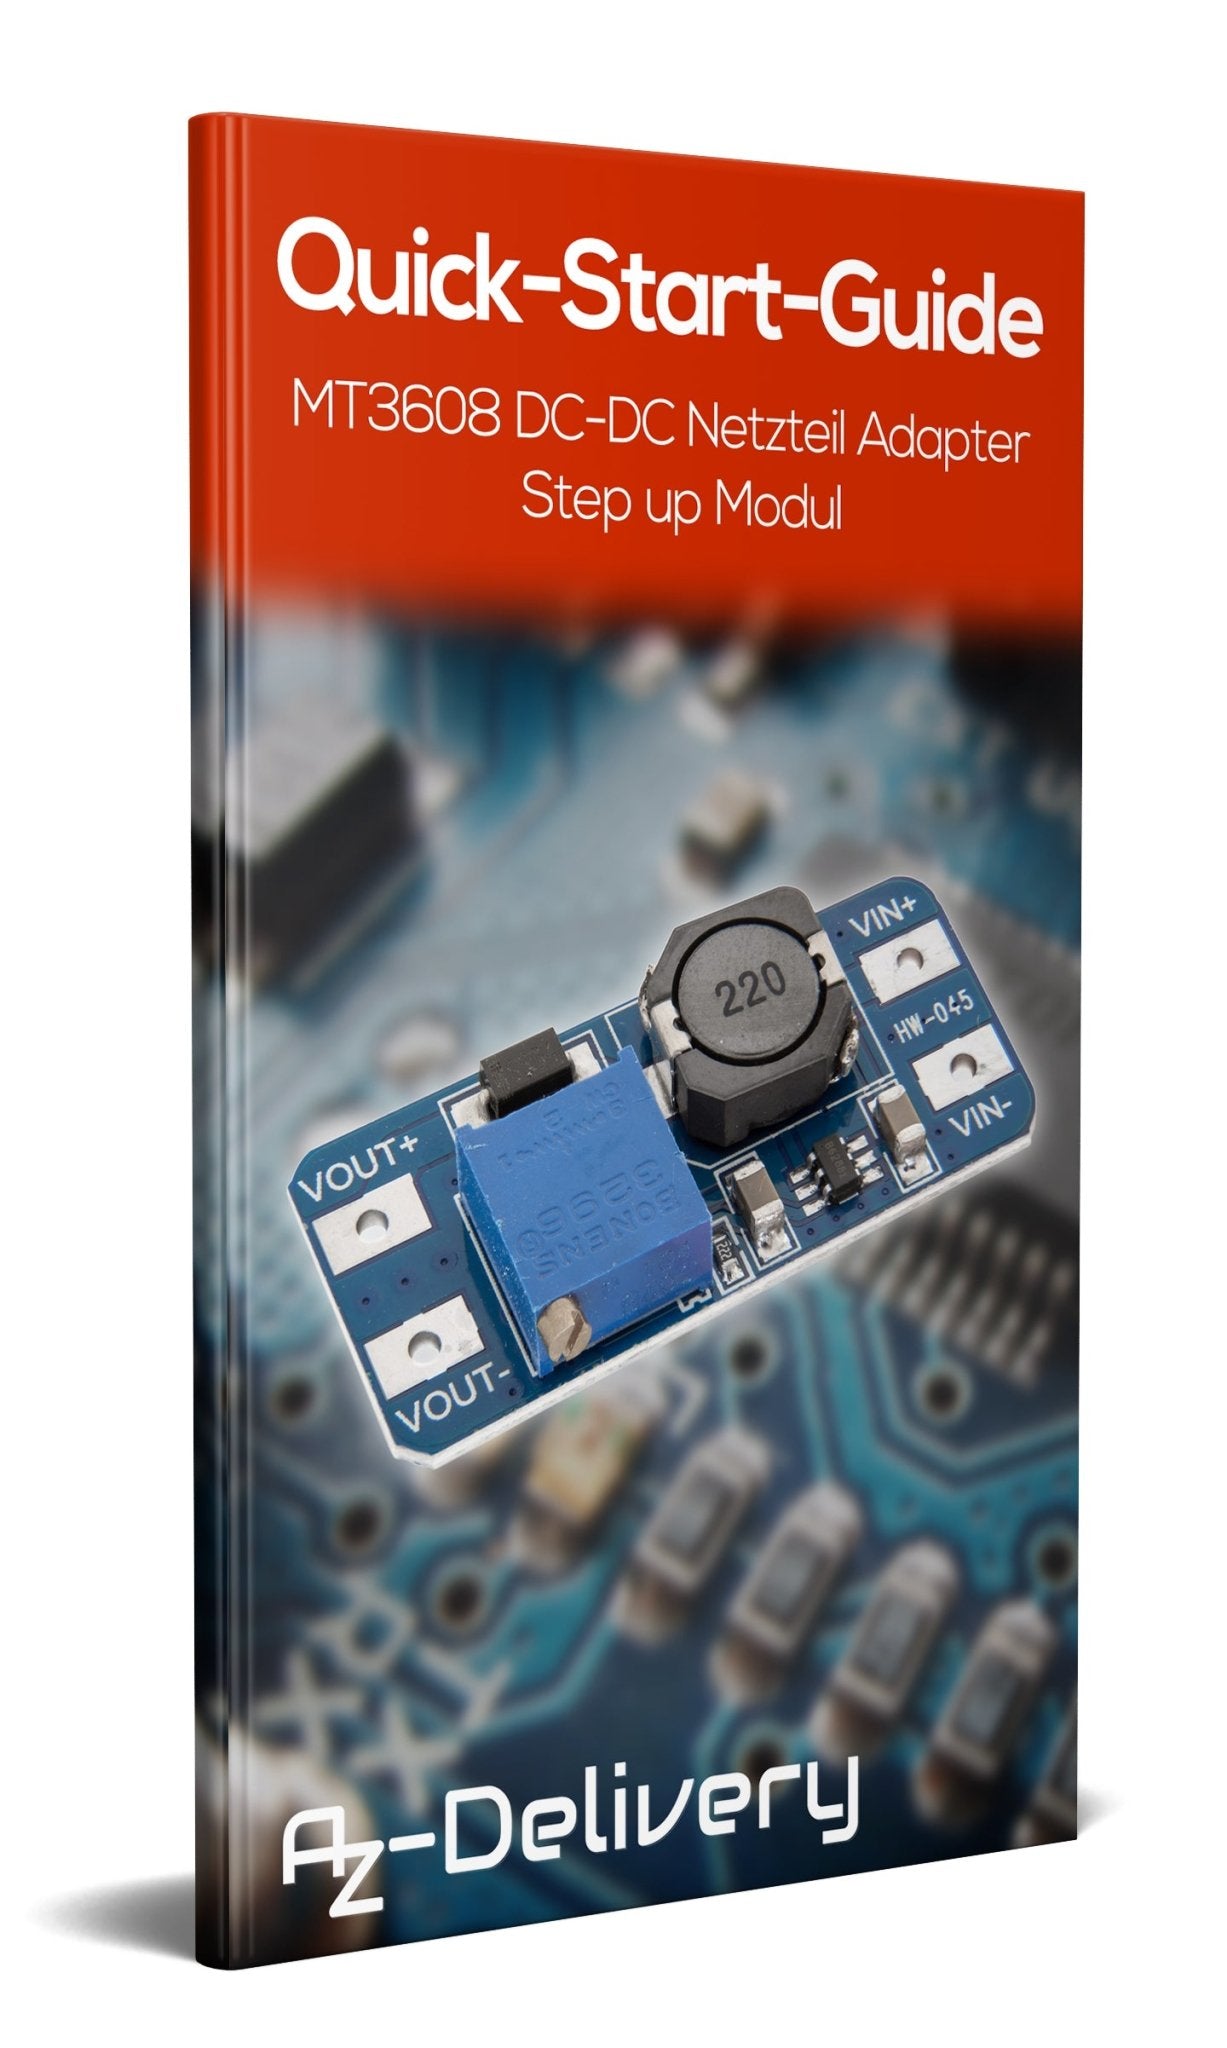 MT3608 DC-DC Netzteil Adapter Step up Modul - AZ-Delivery